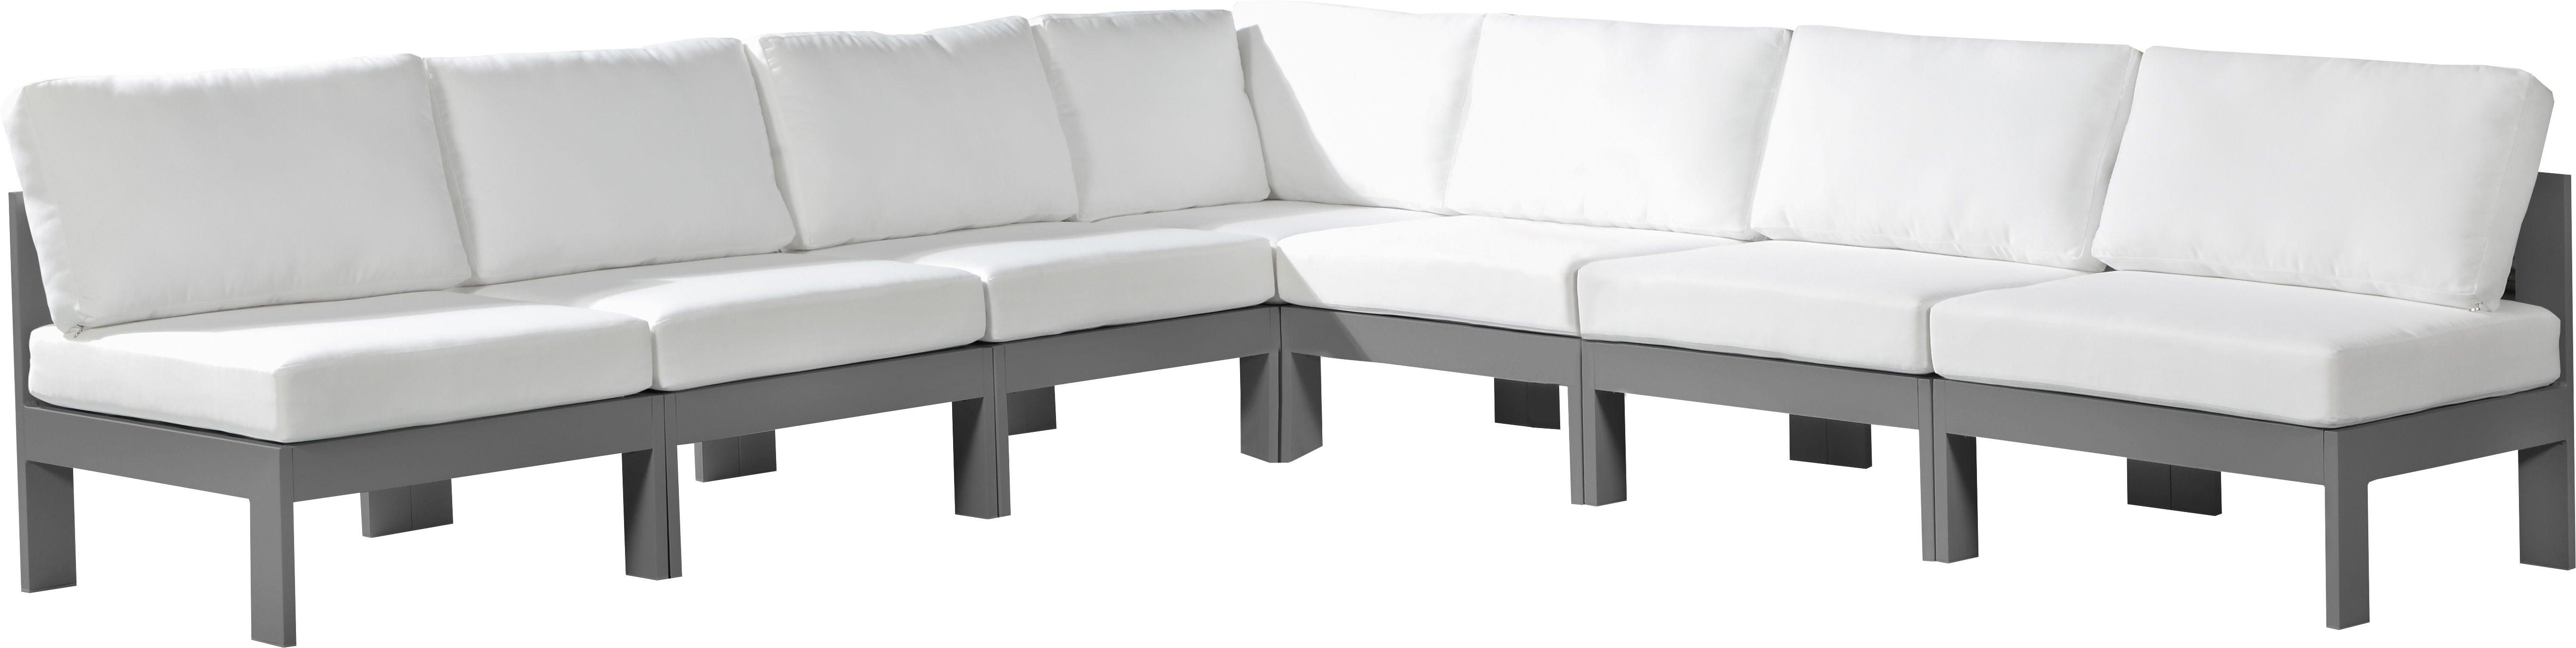 Meridian Furniture - Nizuc - Outdoor Patio Modular Sectional 7 Piece - White - Fabric - Modern & Contemporary - 5th Avenue Furniture